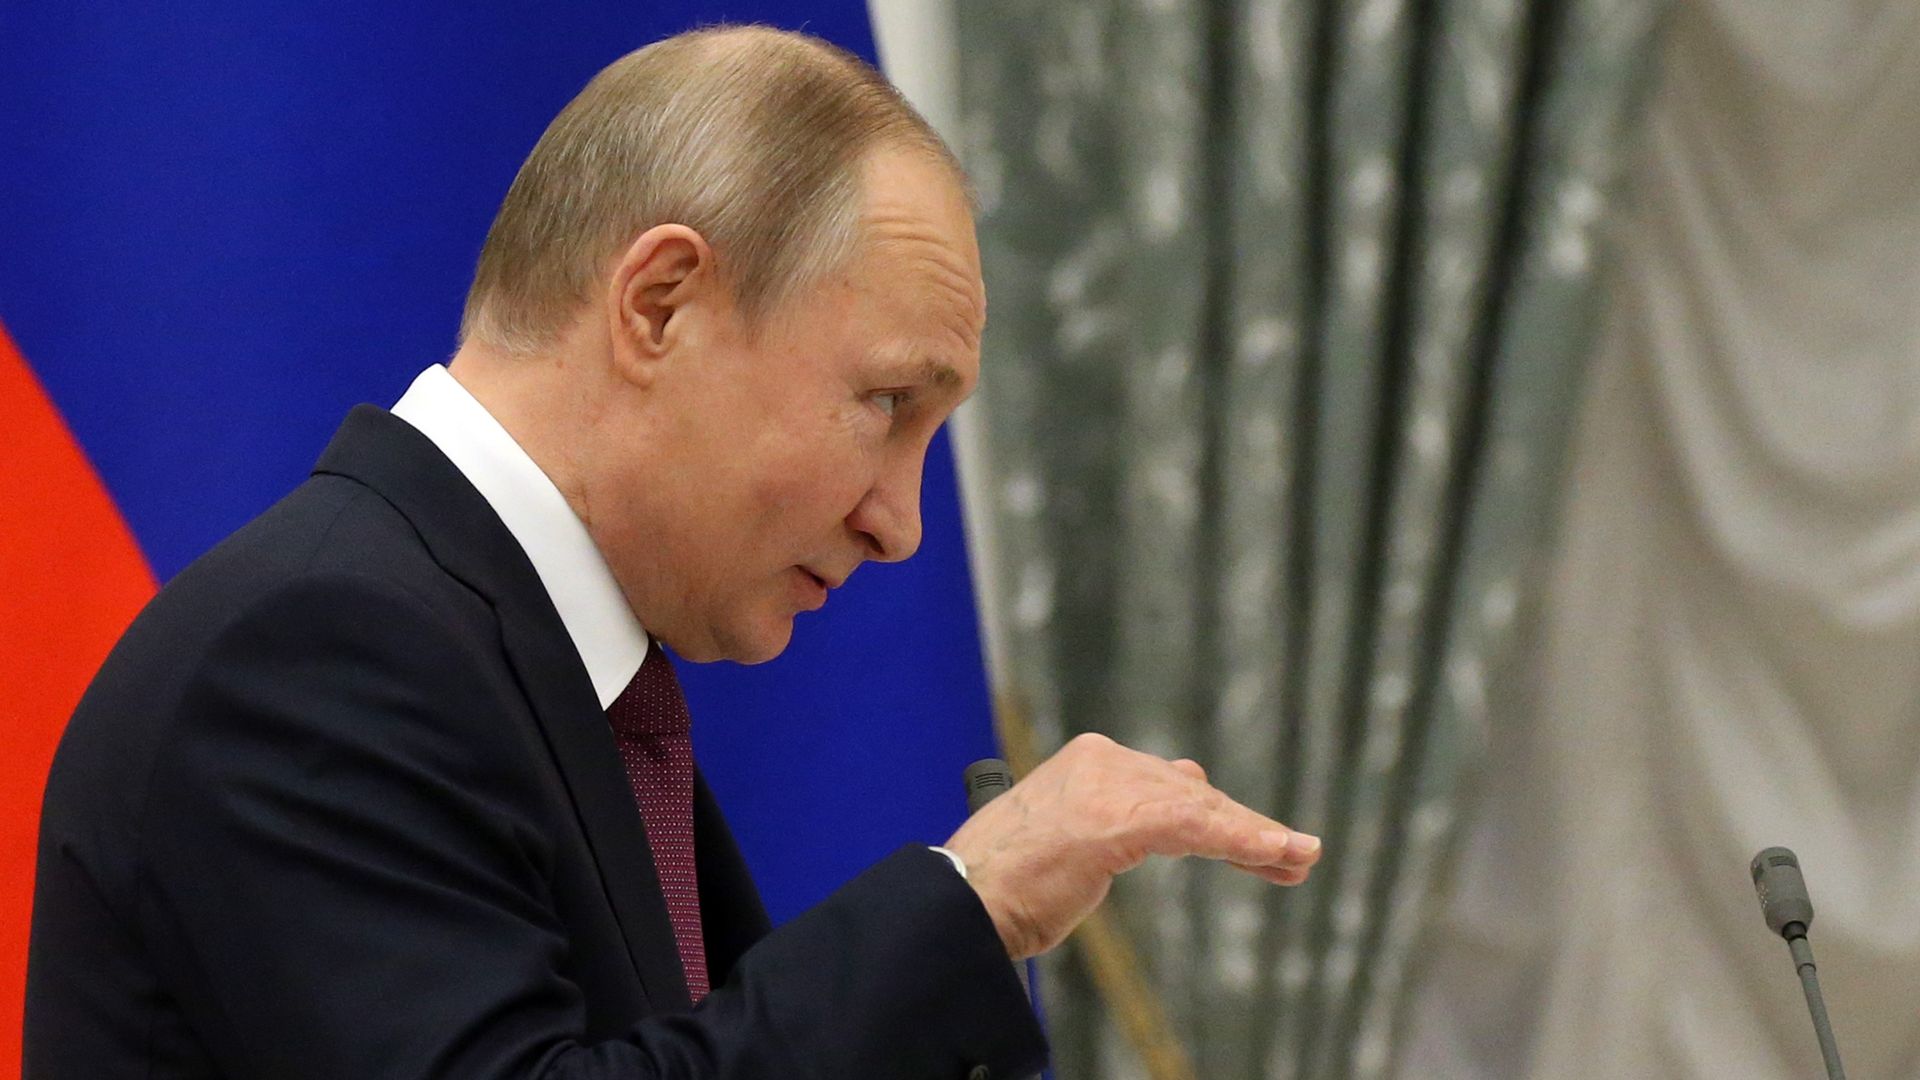 Vladimir Putin gestures with his hand.